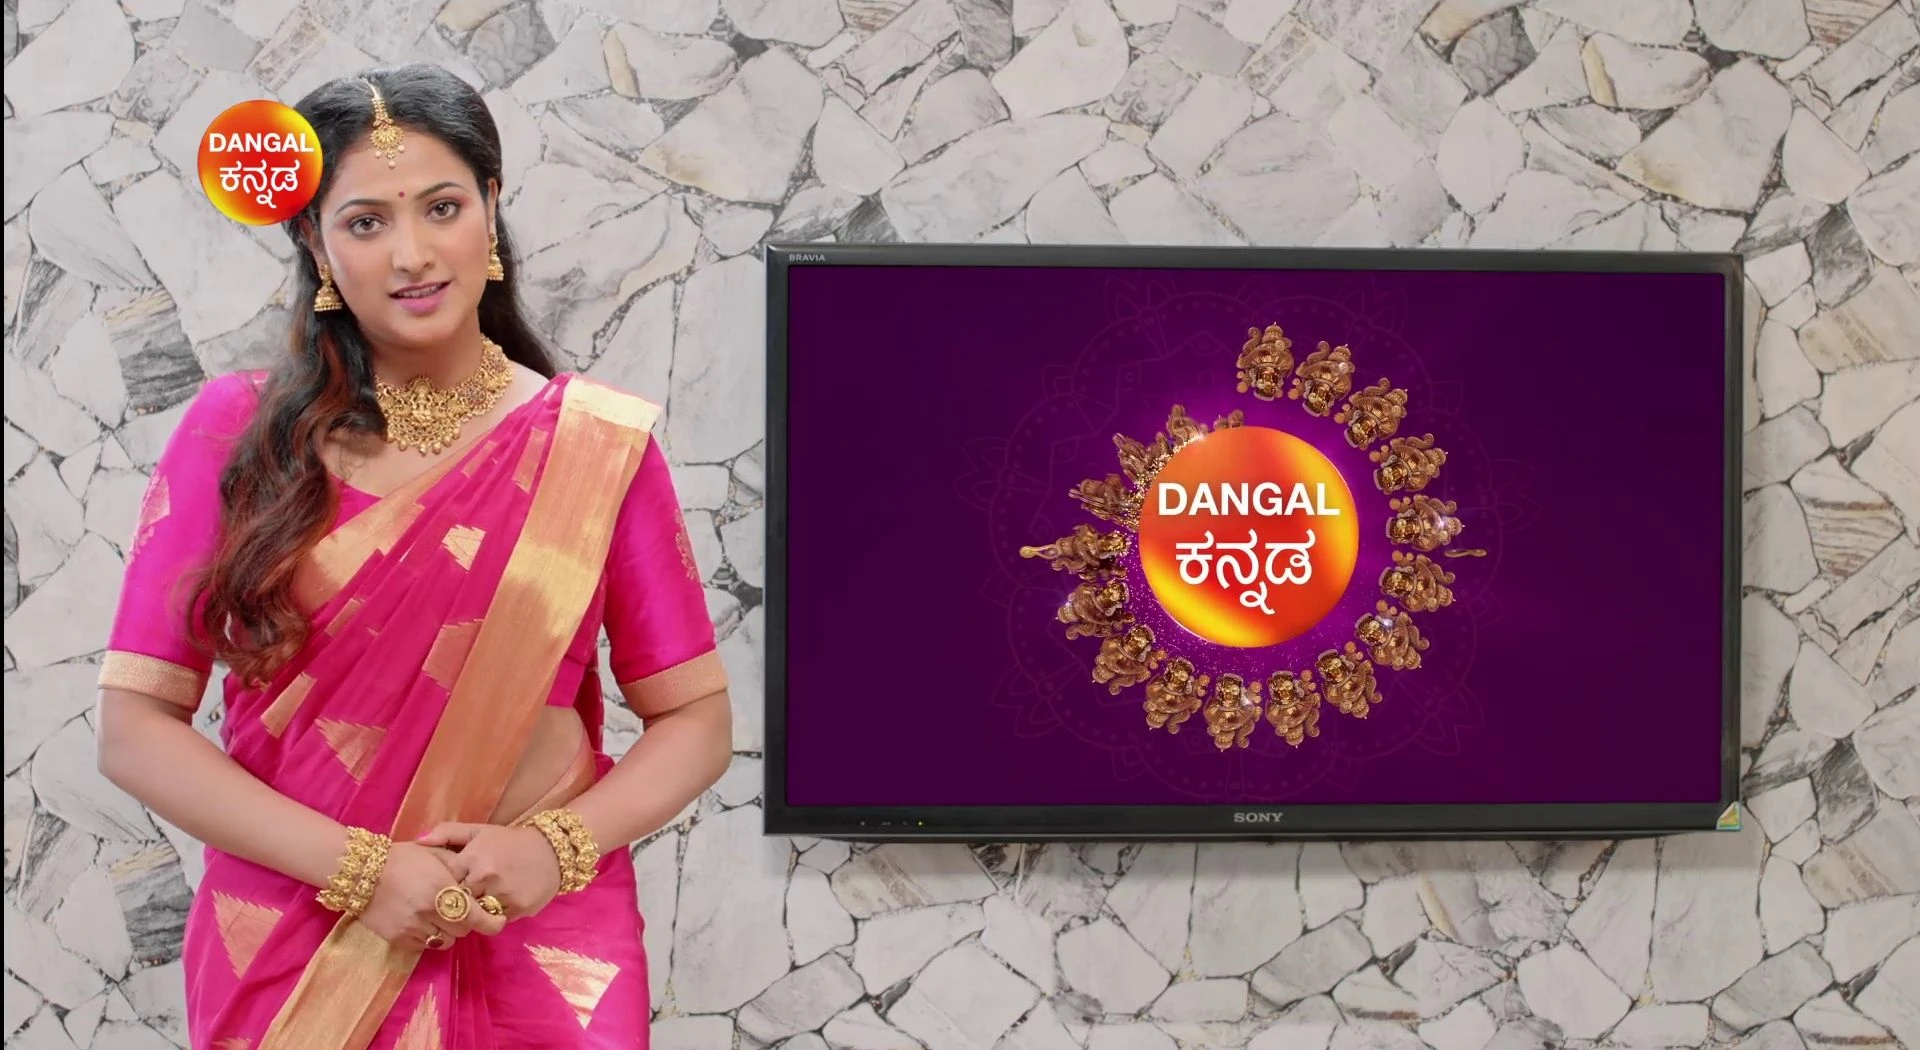 Dangal Kannada (Dum TV) Program Schedule - List of Serials With Telecast Time 4